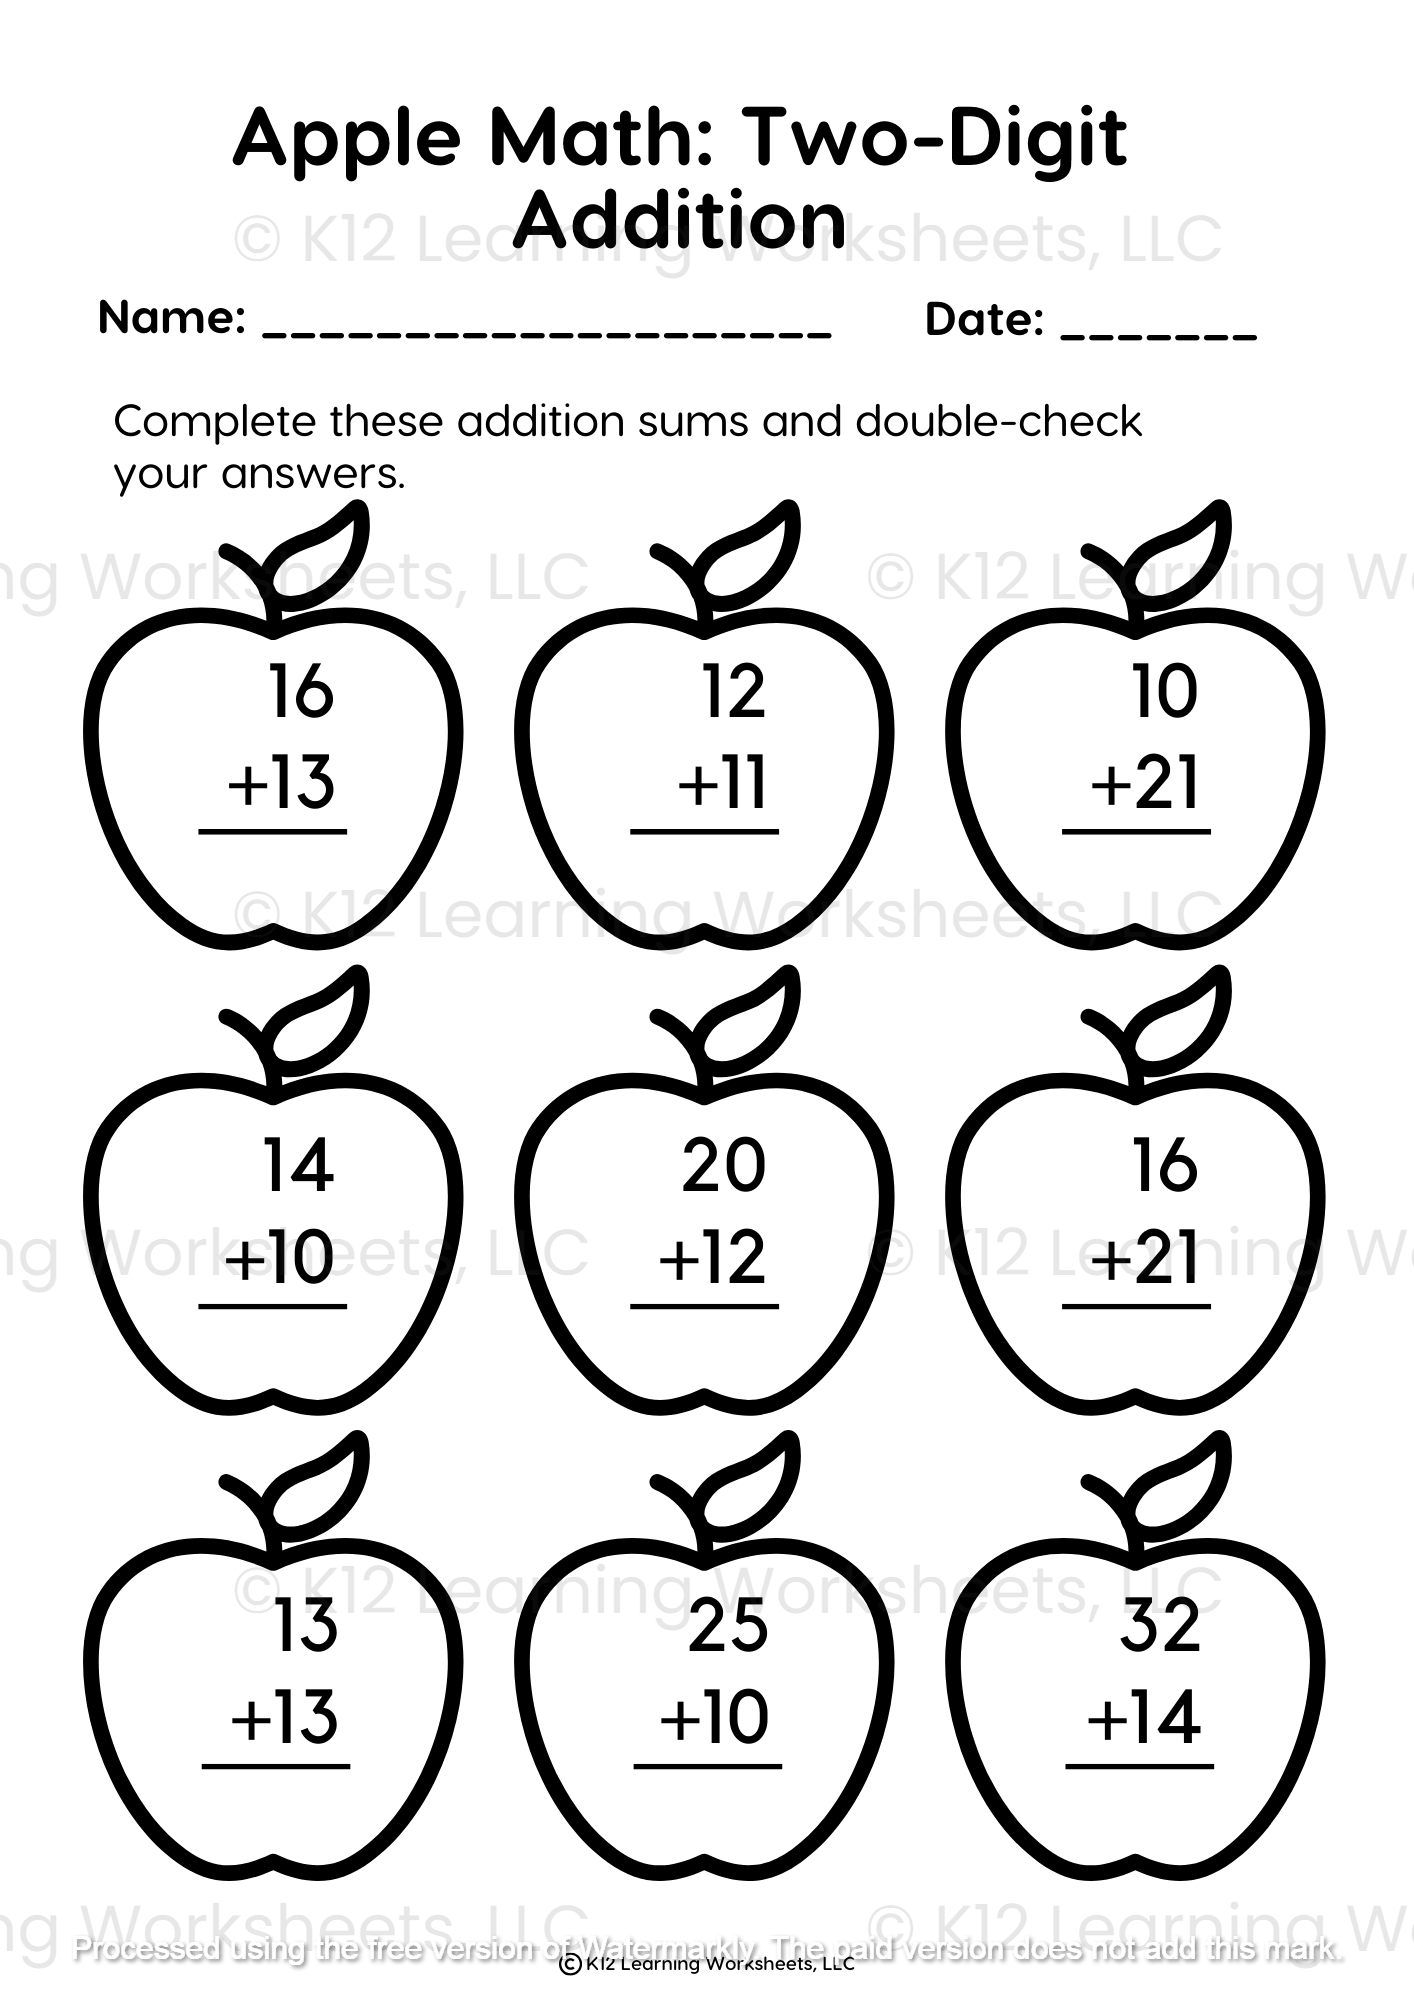 Apple Math: Two-Digit Addition